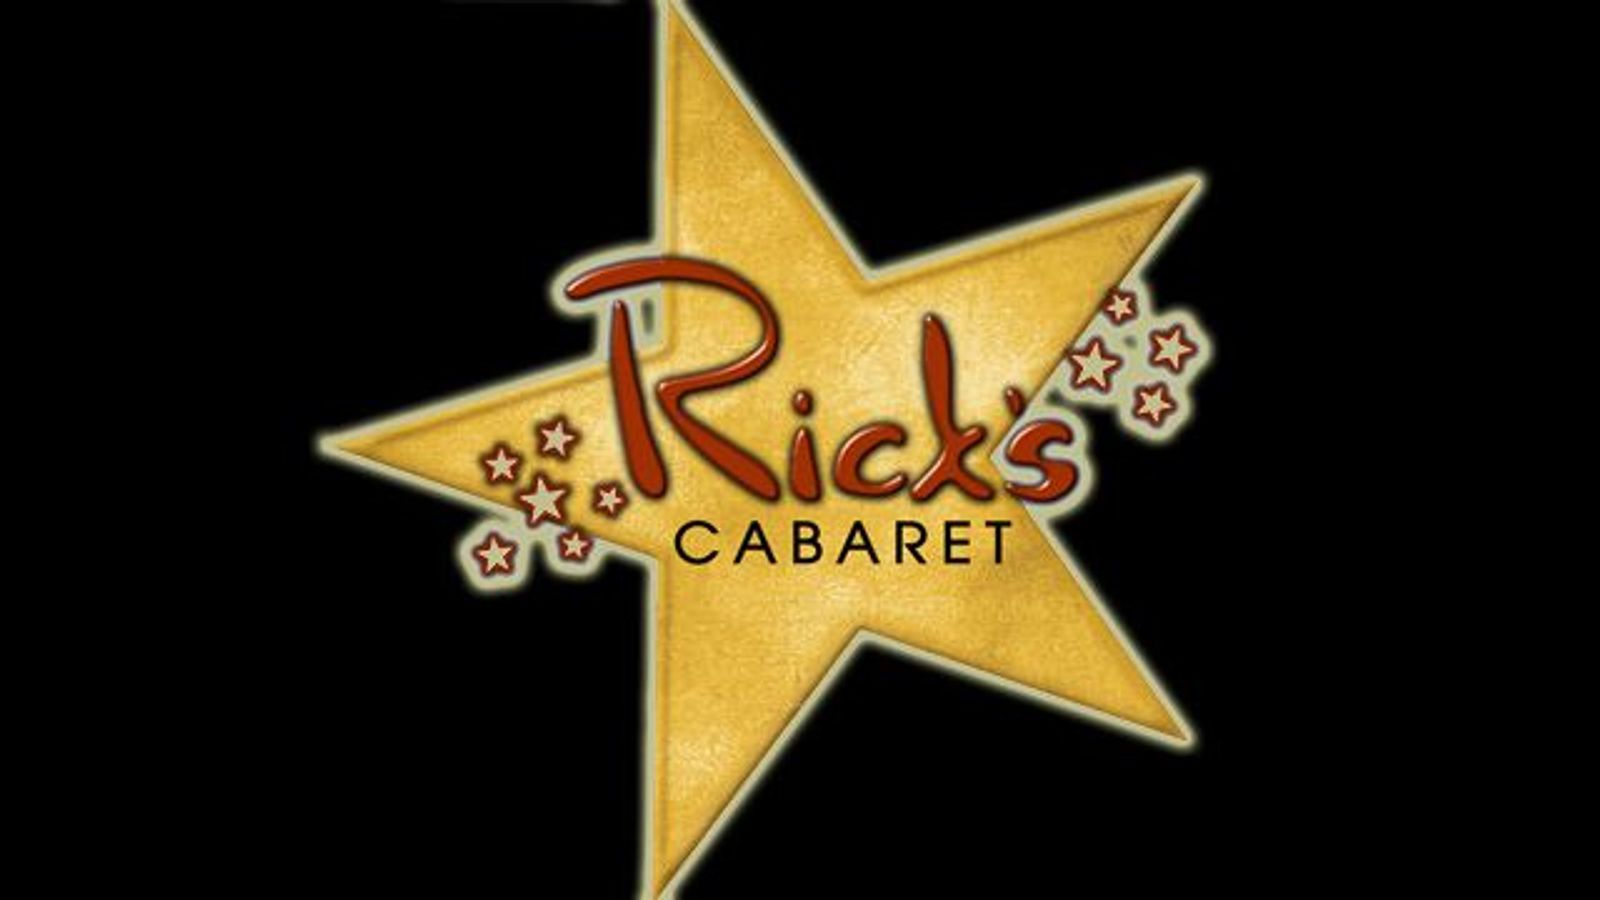 Rick's Cabaret Sees Second Quarter Gains Over 2010